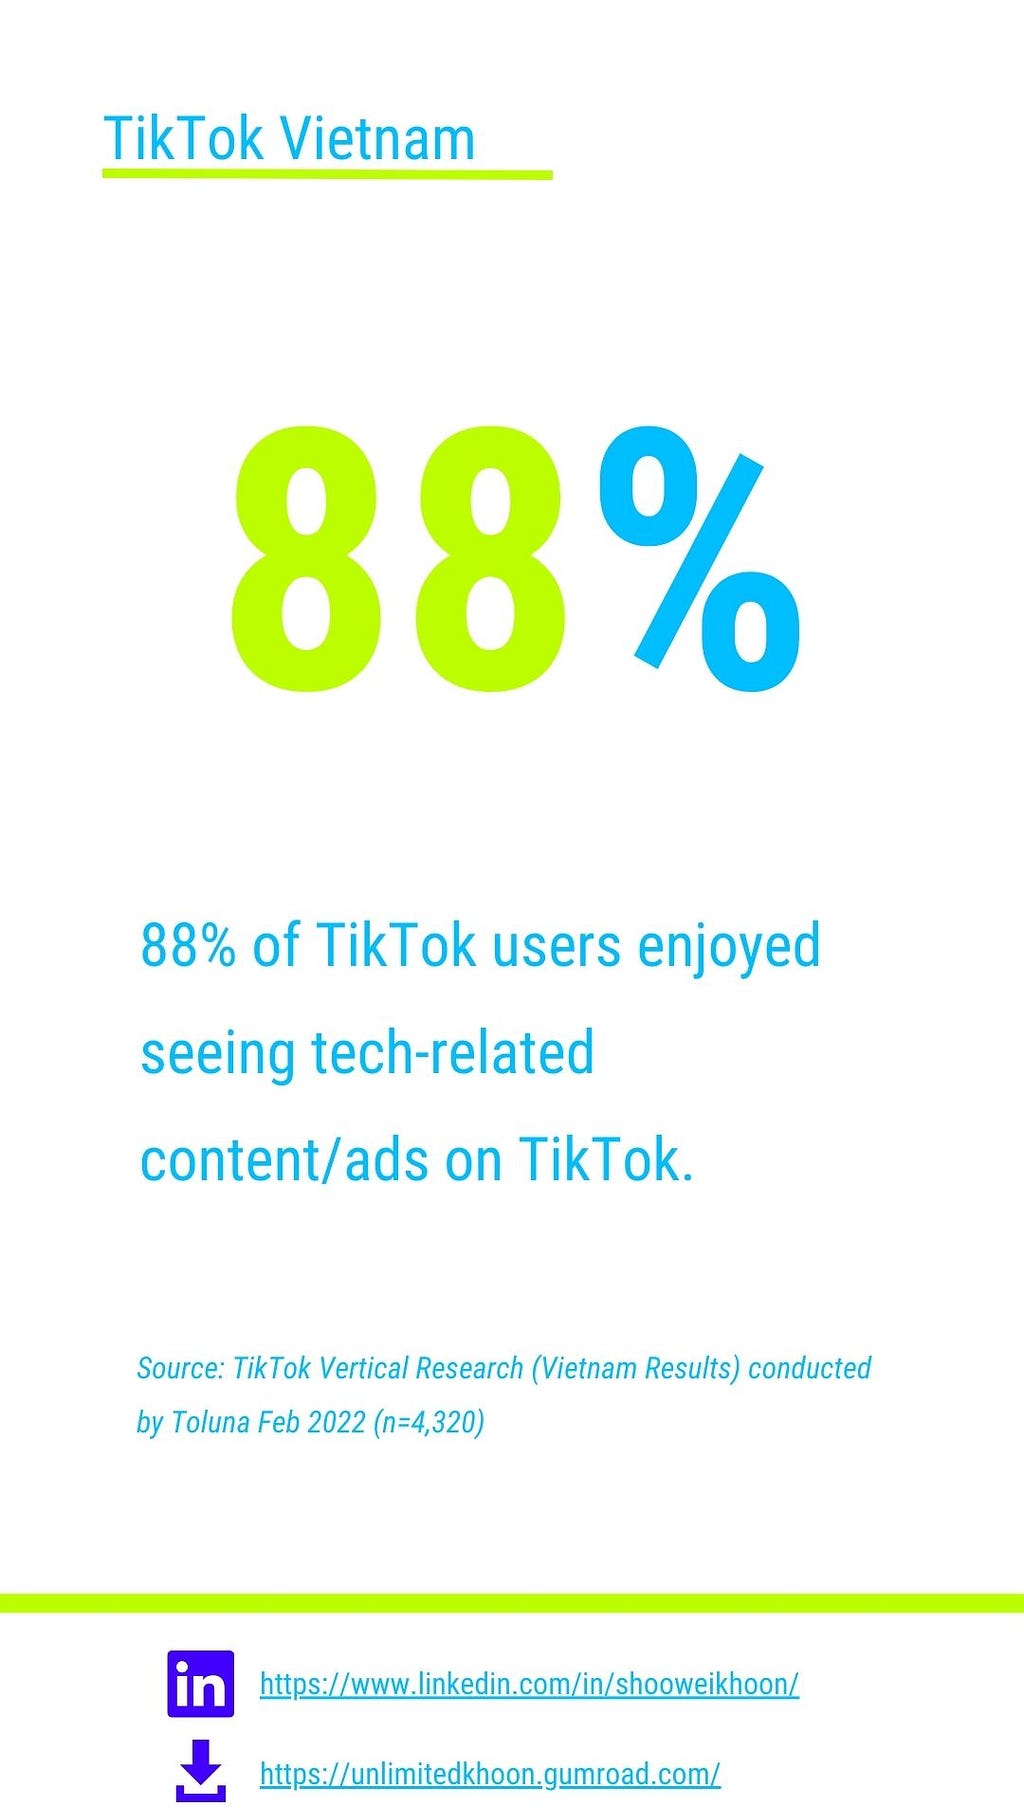 88% of VN TikTok users enjoyed seeing tech-related contentads on TikTok.